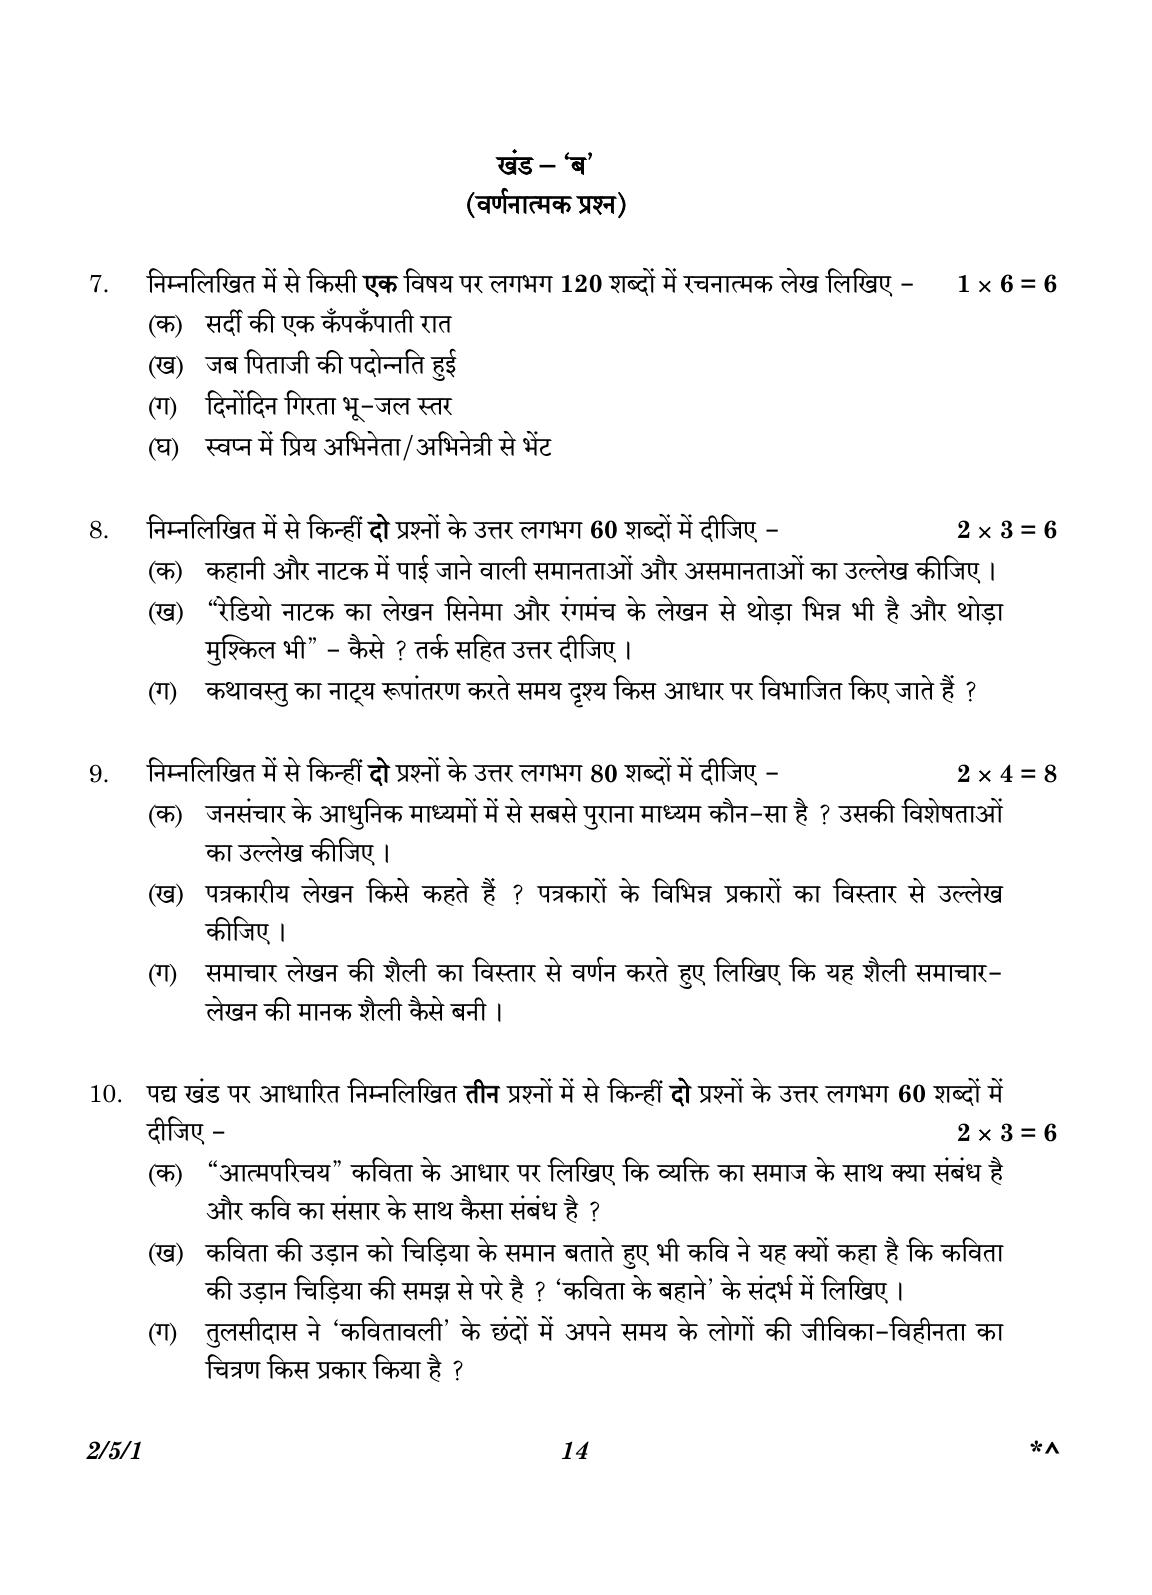 CBSE Class 12 2-5-1 Hindi Core version 2023 Question Paper - Page 14